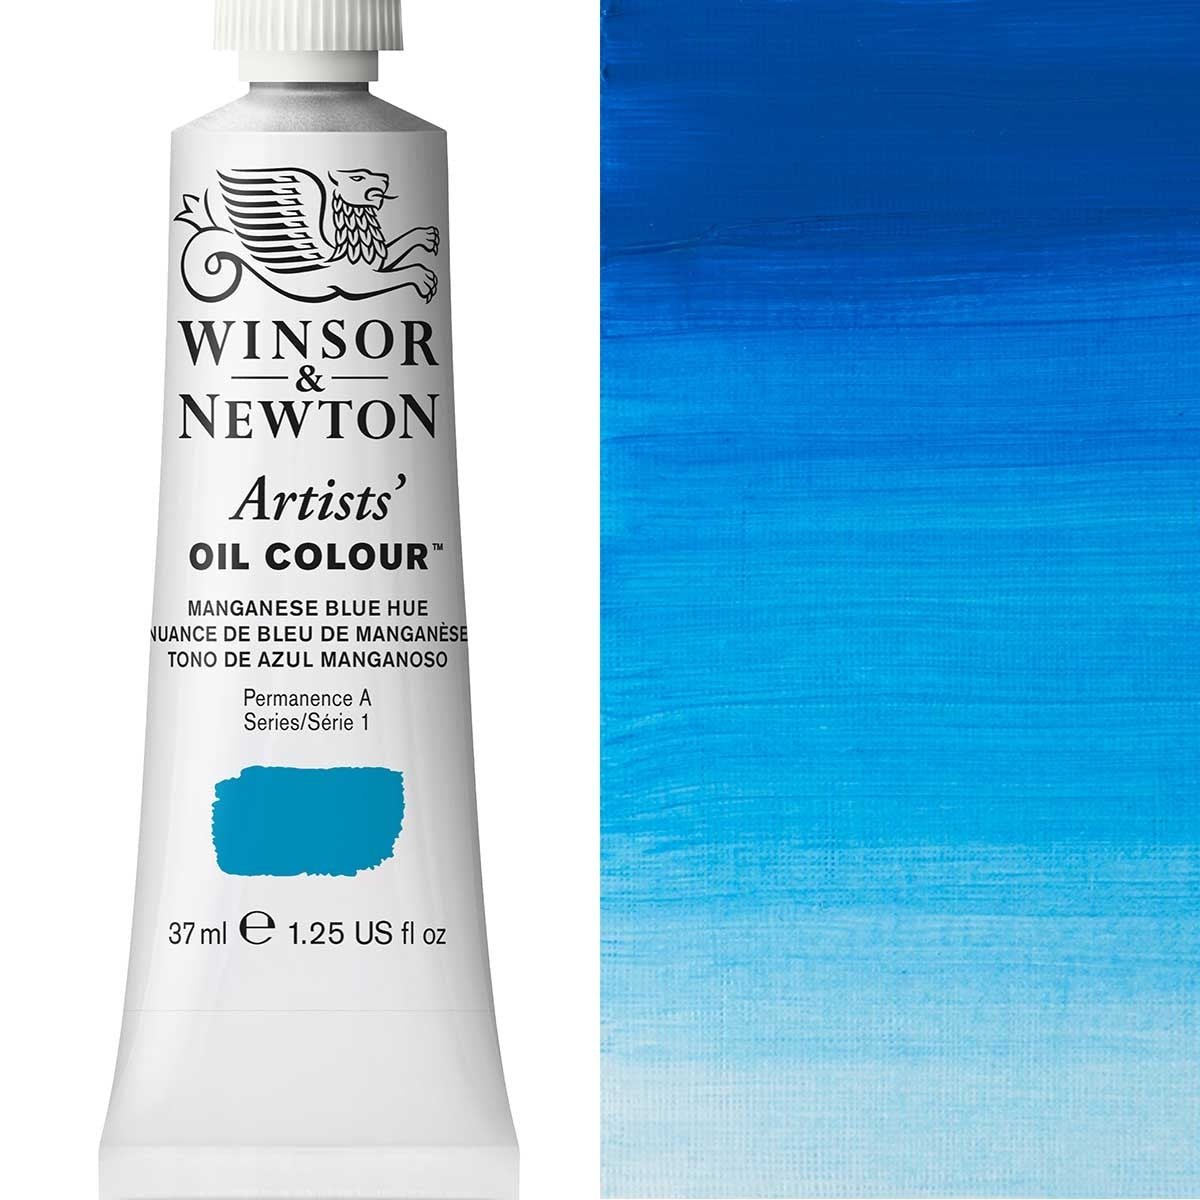 Winsor and Newton - Colore olio degli artisti - 37 ml - Manganese Blue Hue